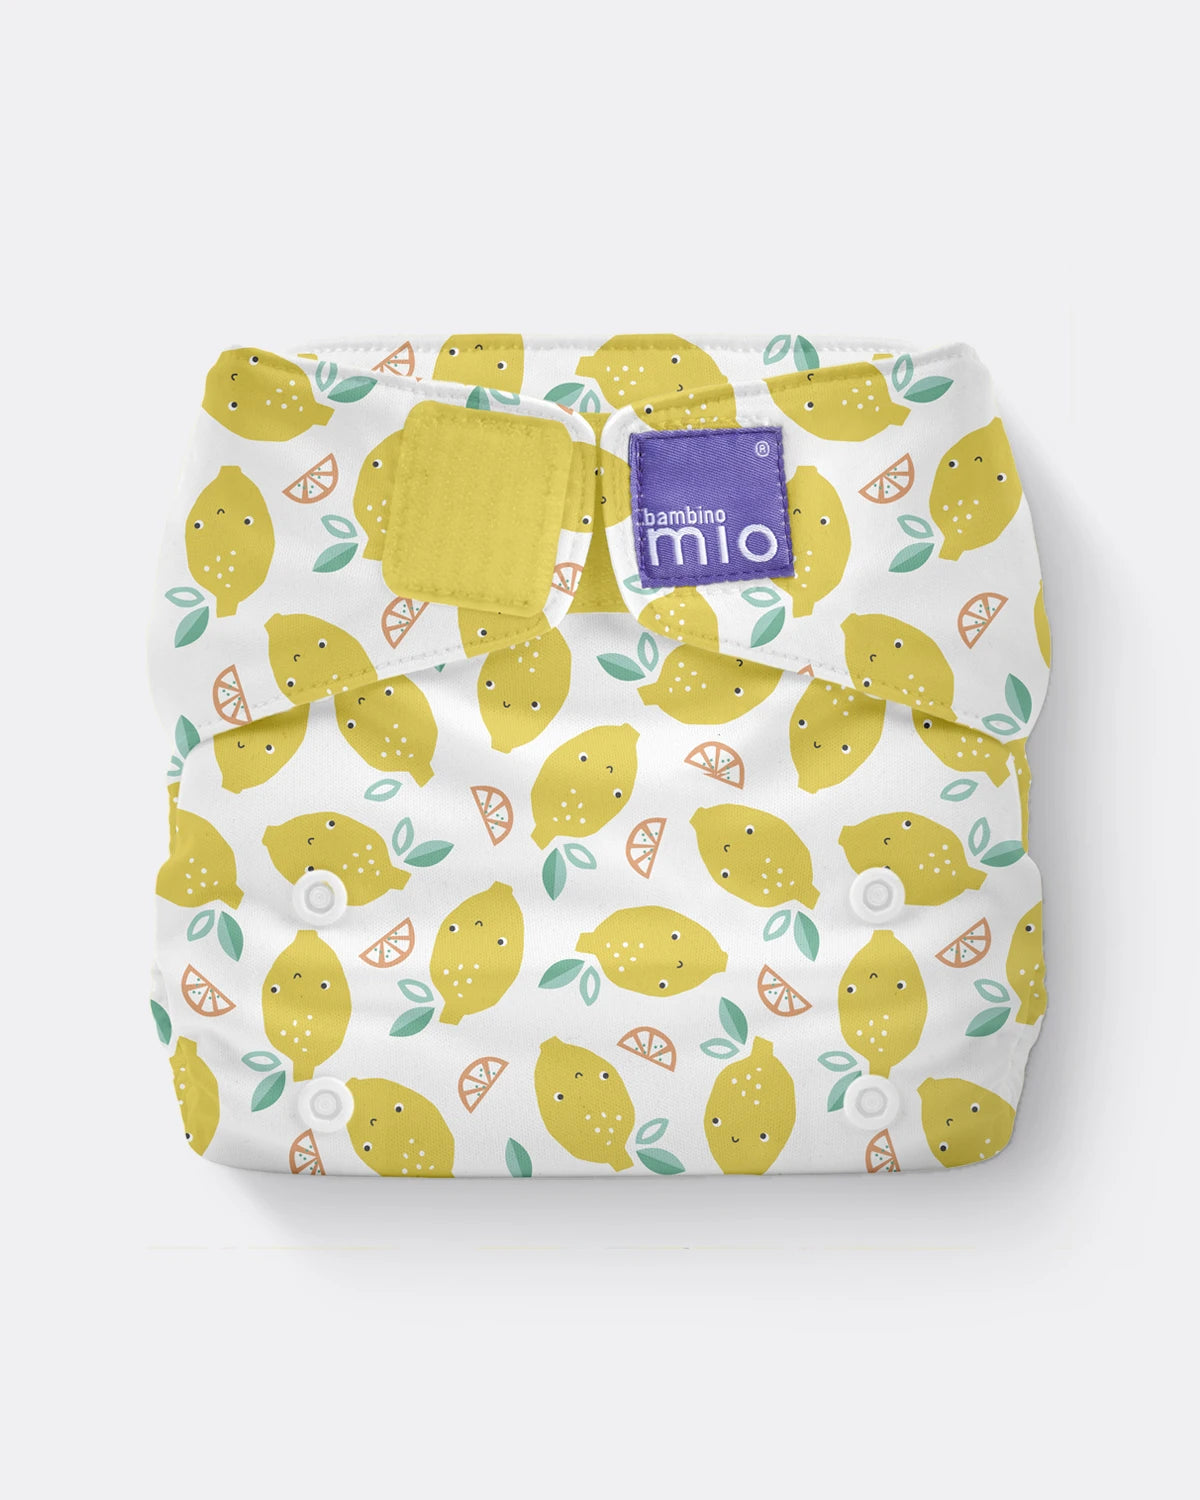 miosolo classic all-in-one diaper